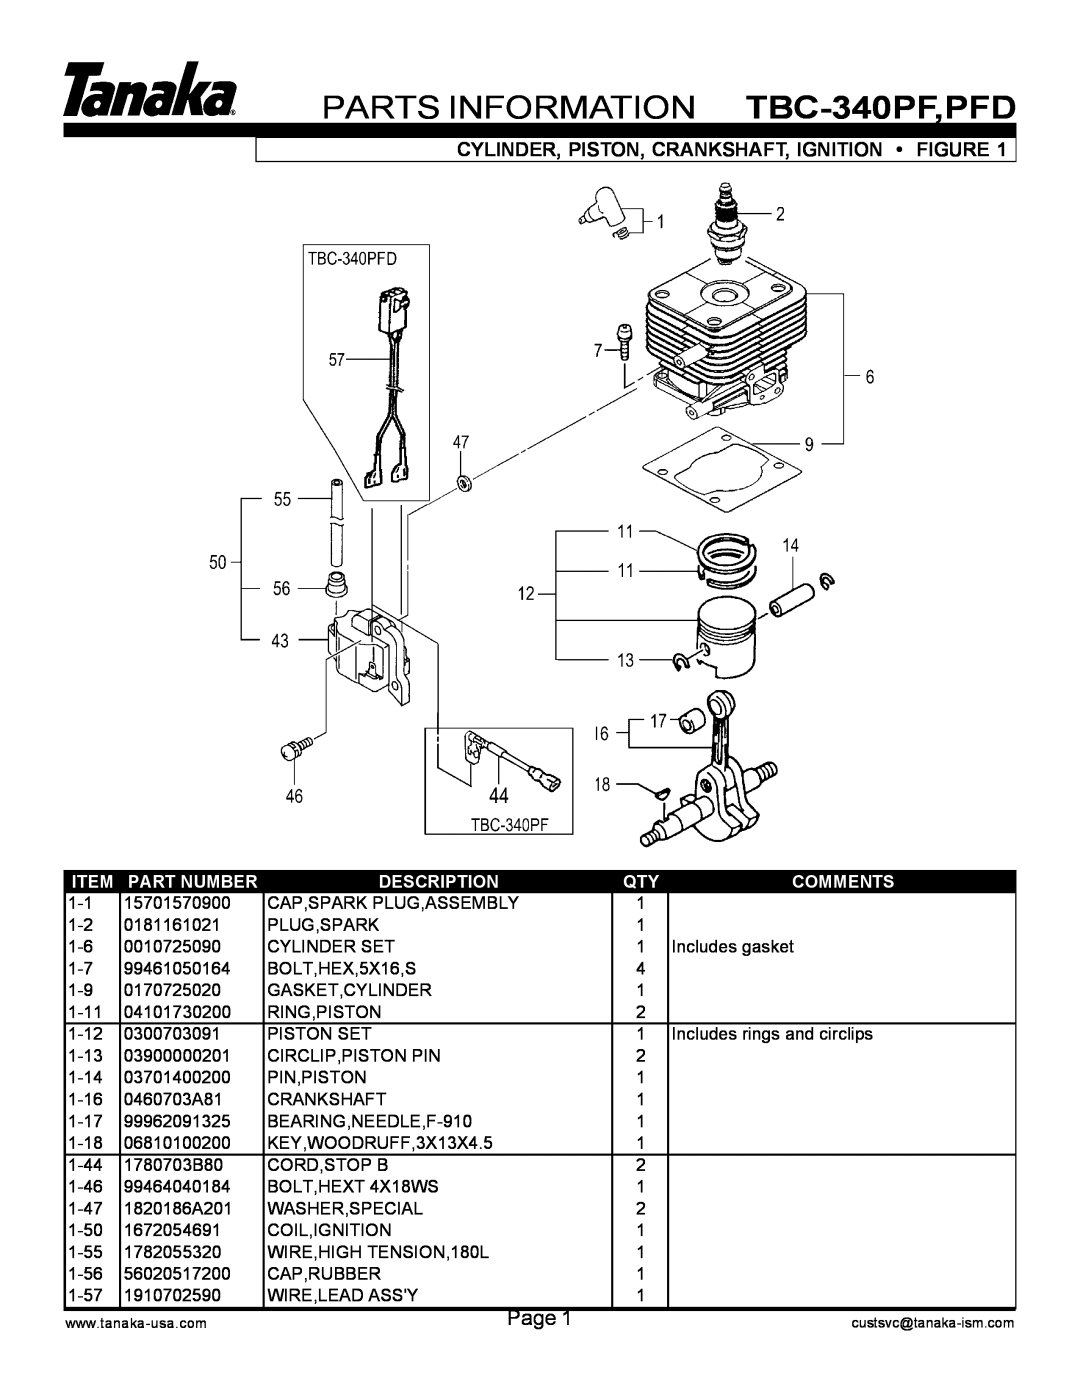 Tanaka manual PARTS INFORMATION TBC-340PF,PFD, Cylinder, Piston, Crankshaft, Ignition Figure, Part Number, Description 